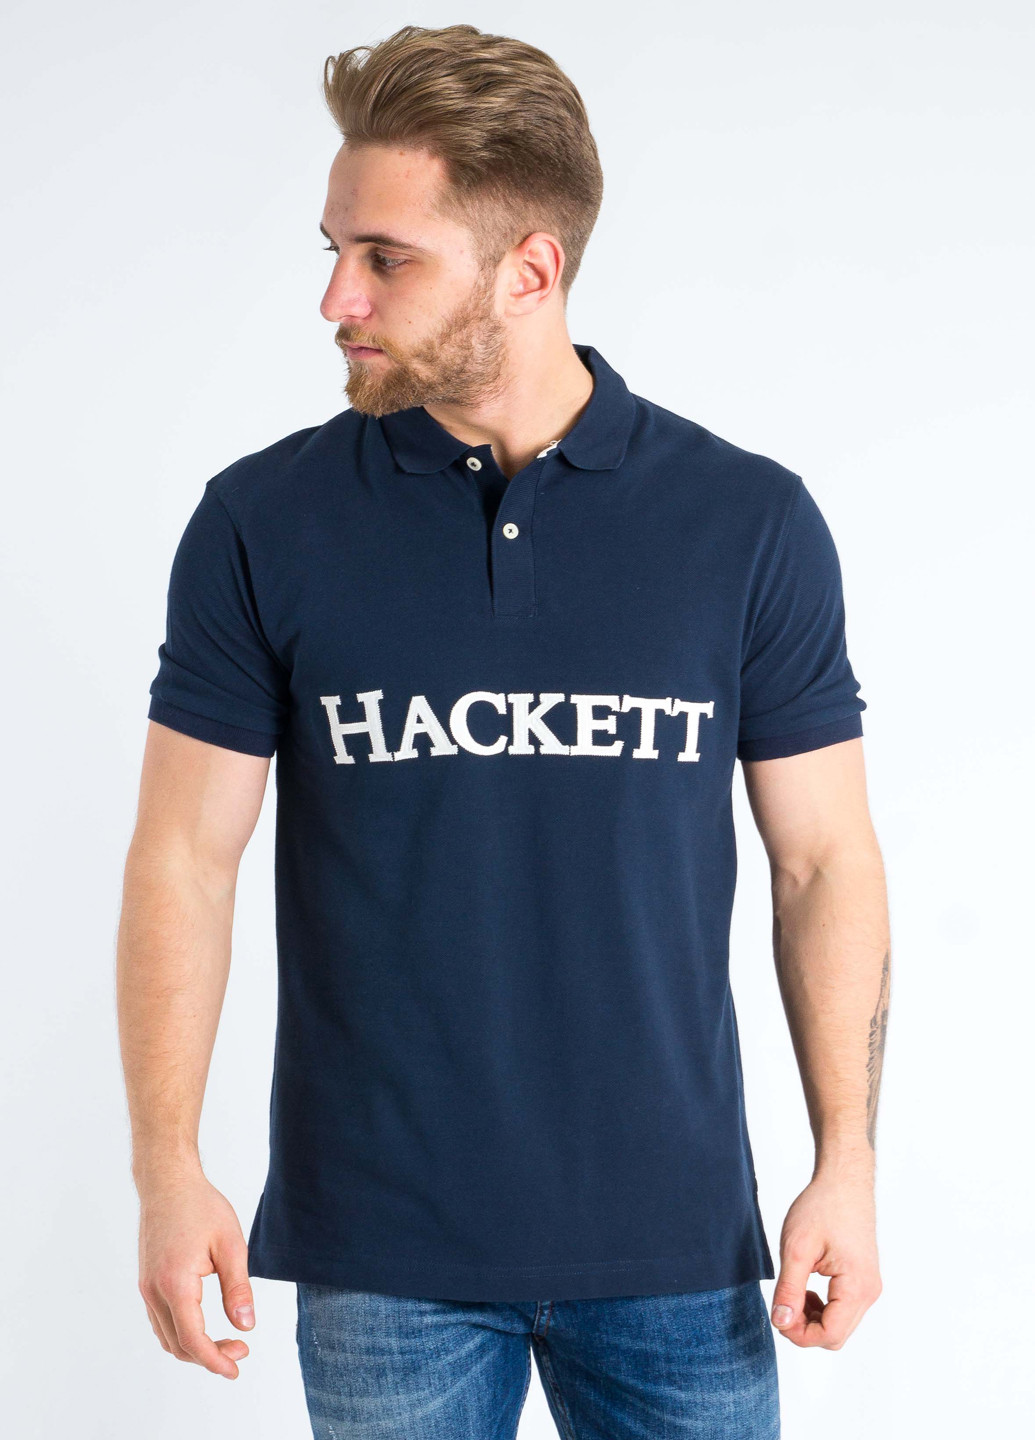 Темно-синяя футболка-поло для мужчин Hackett с надписью